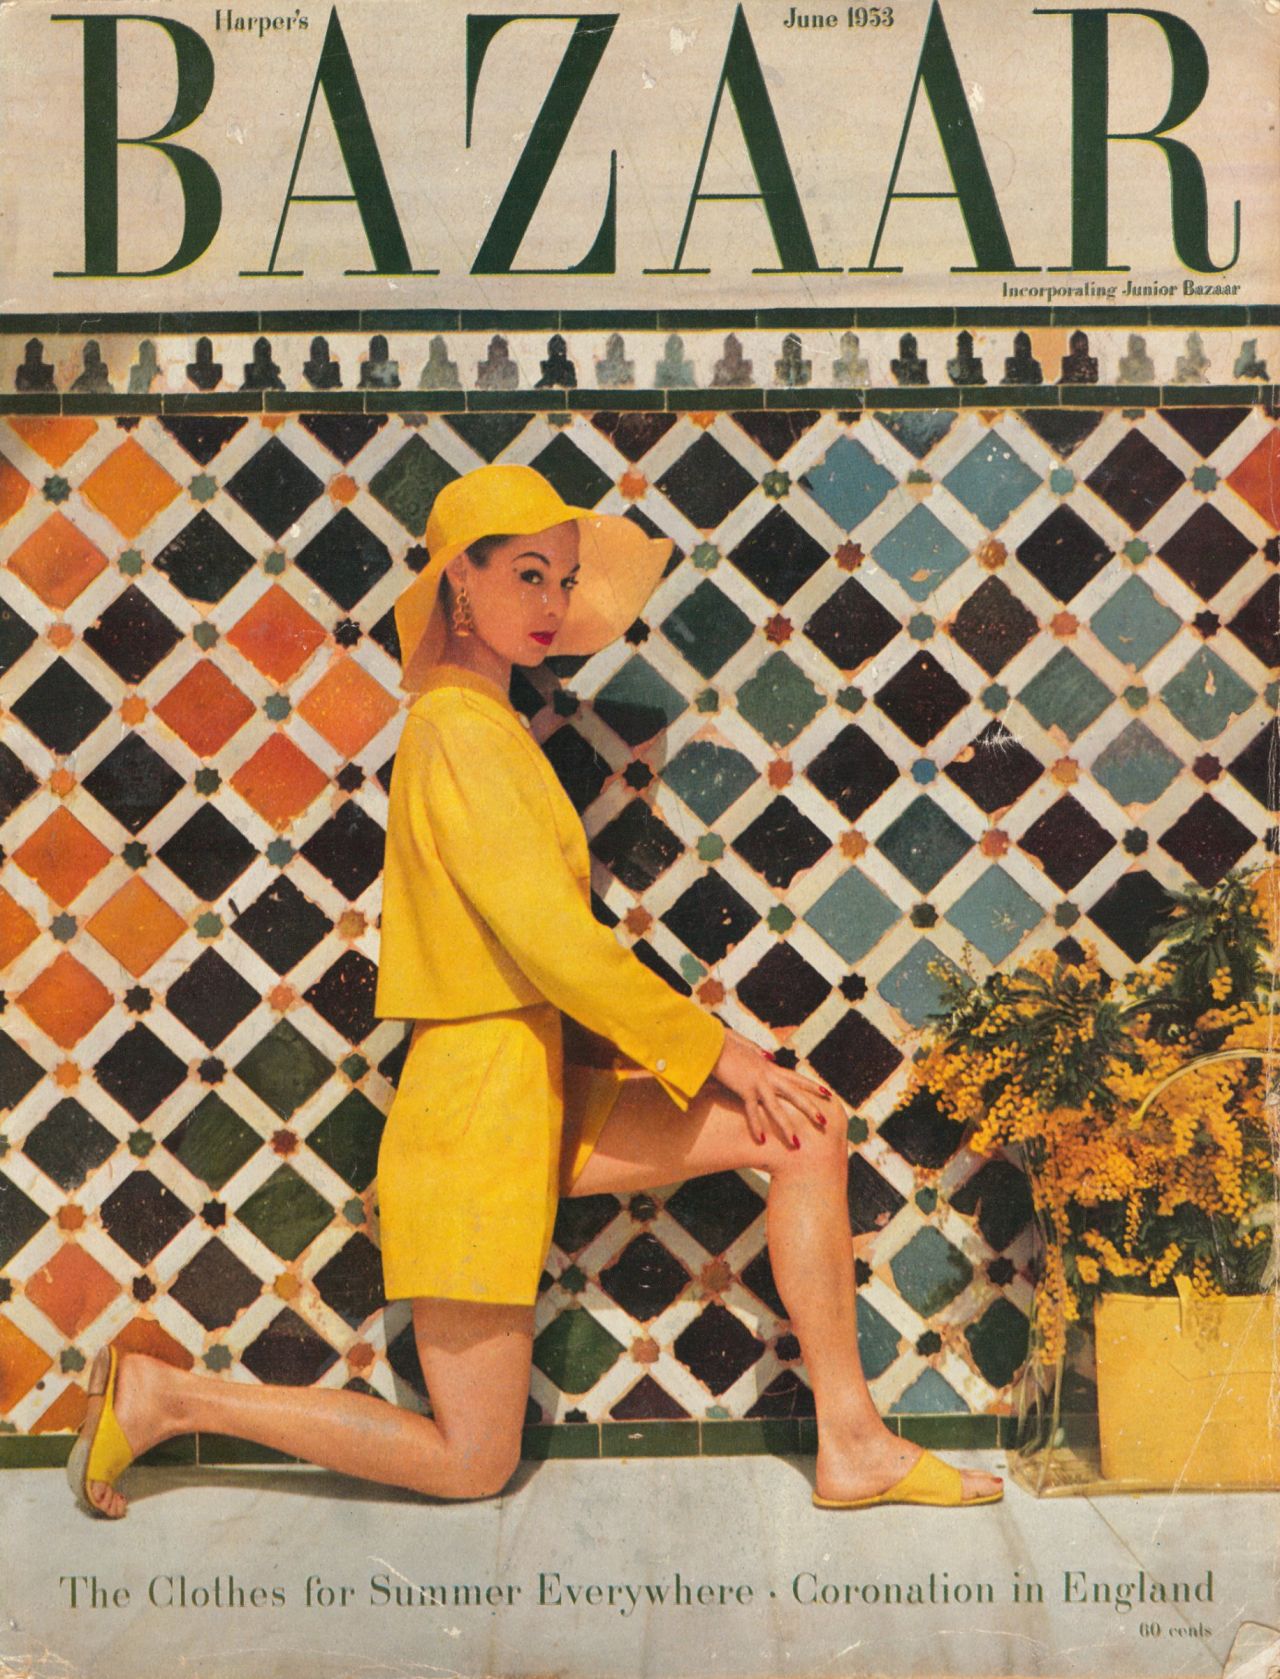 A 1953 Harper's Bazaar cover shot by Louise Dahl-Wolfe.